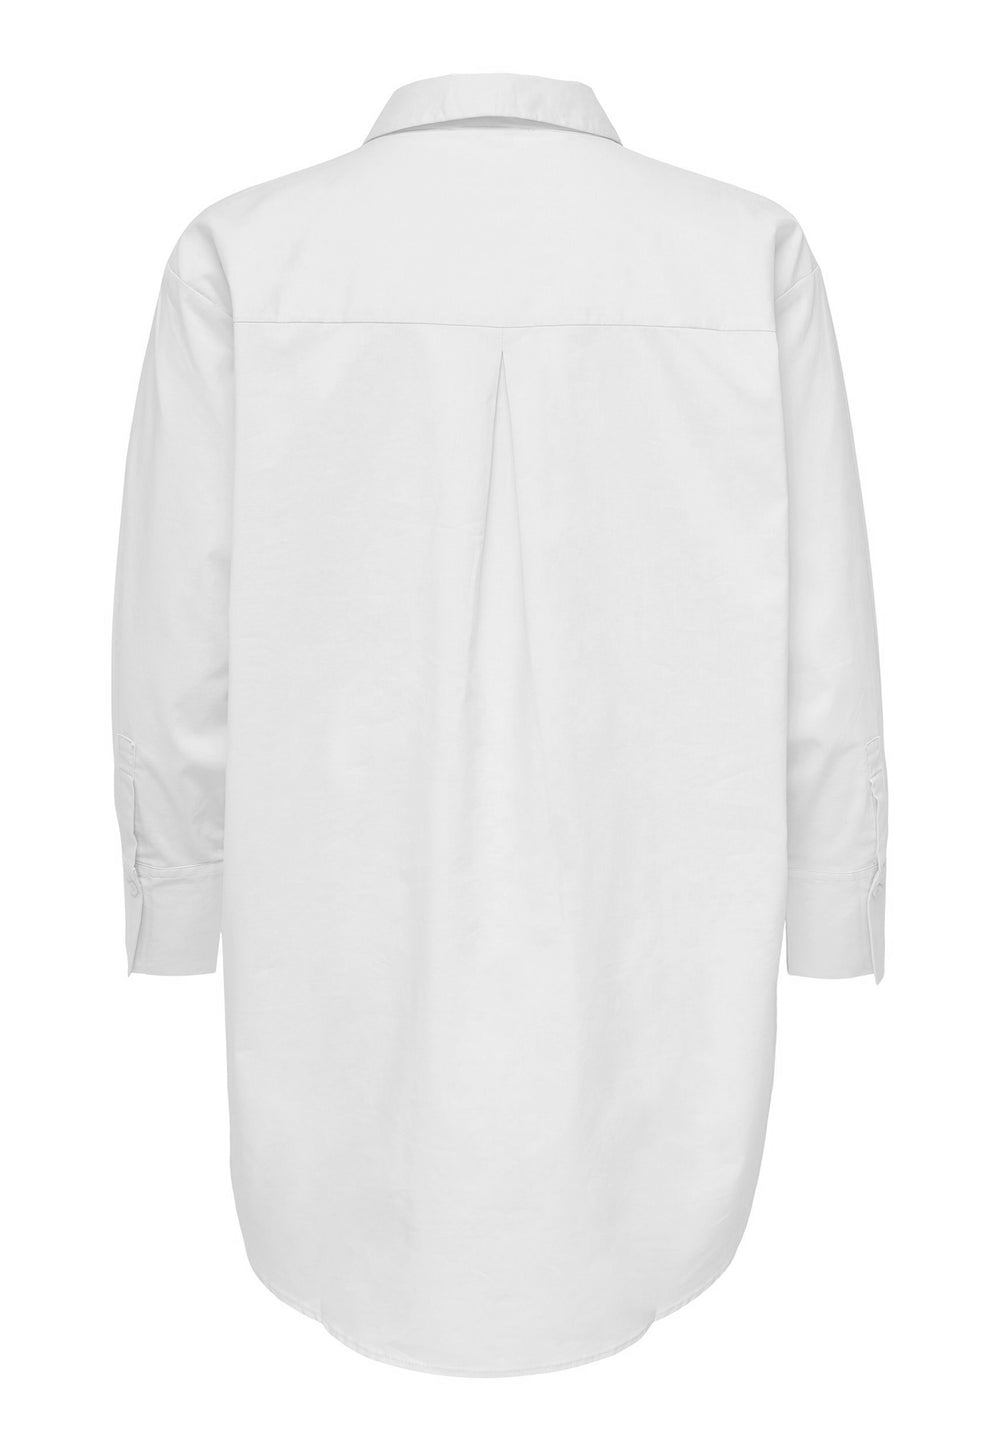 JDY Mio Longline Long Sleeve Cotton Shirt with Dip Hem in White